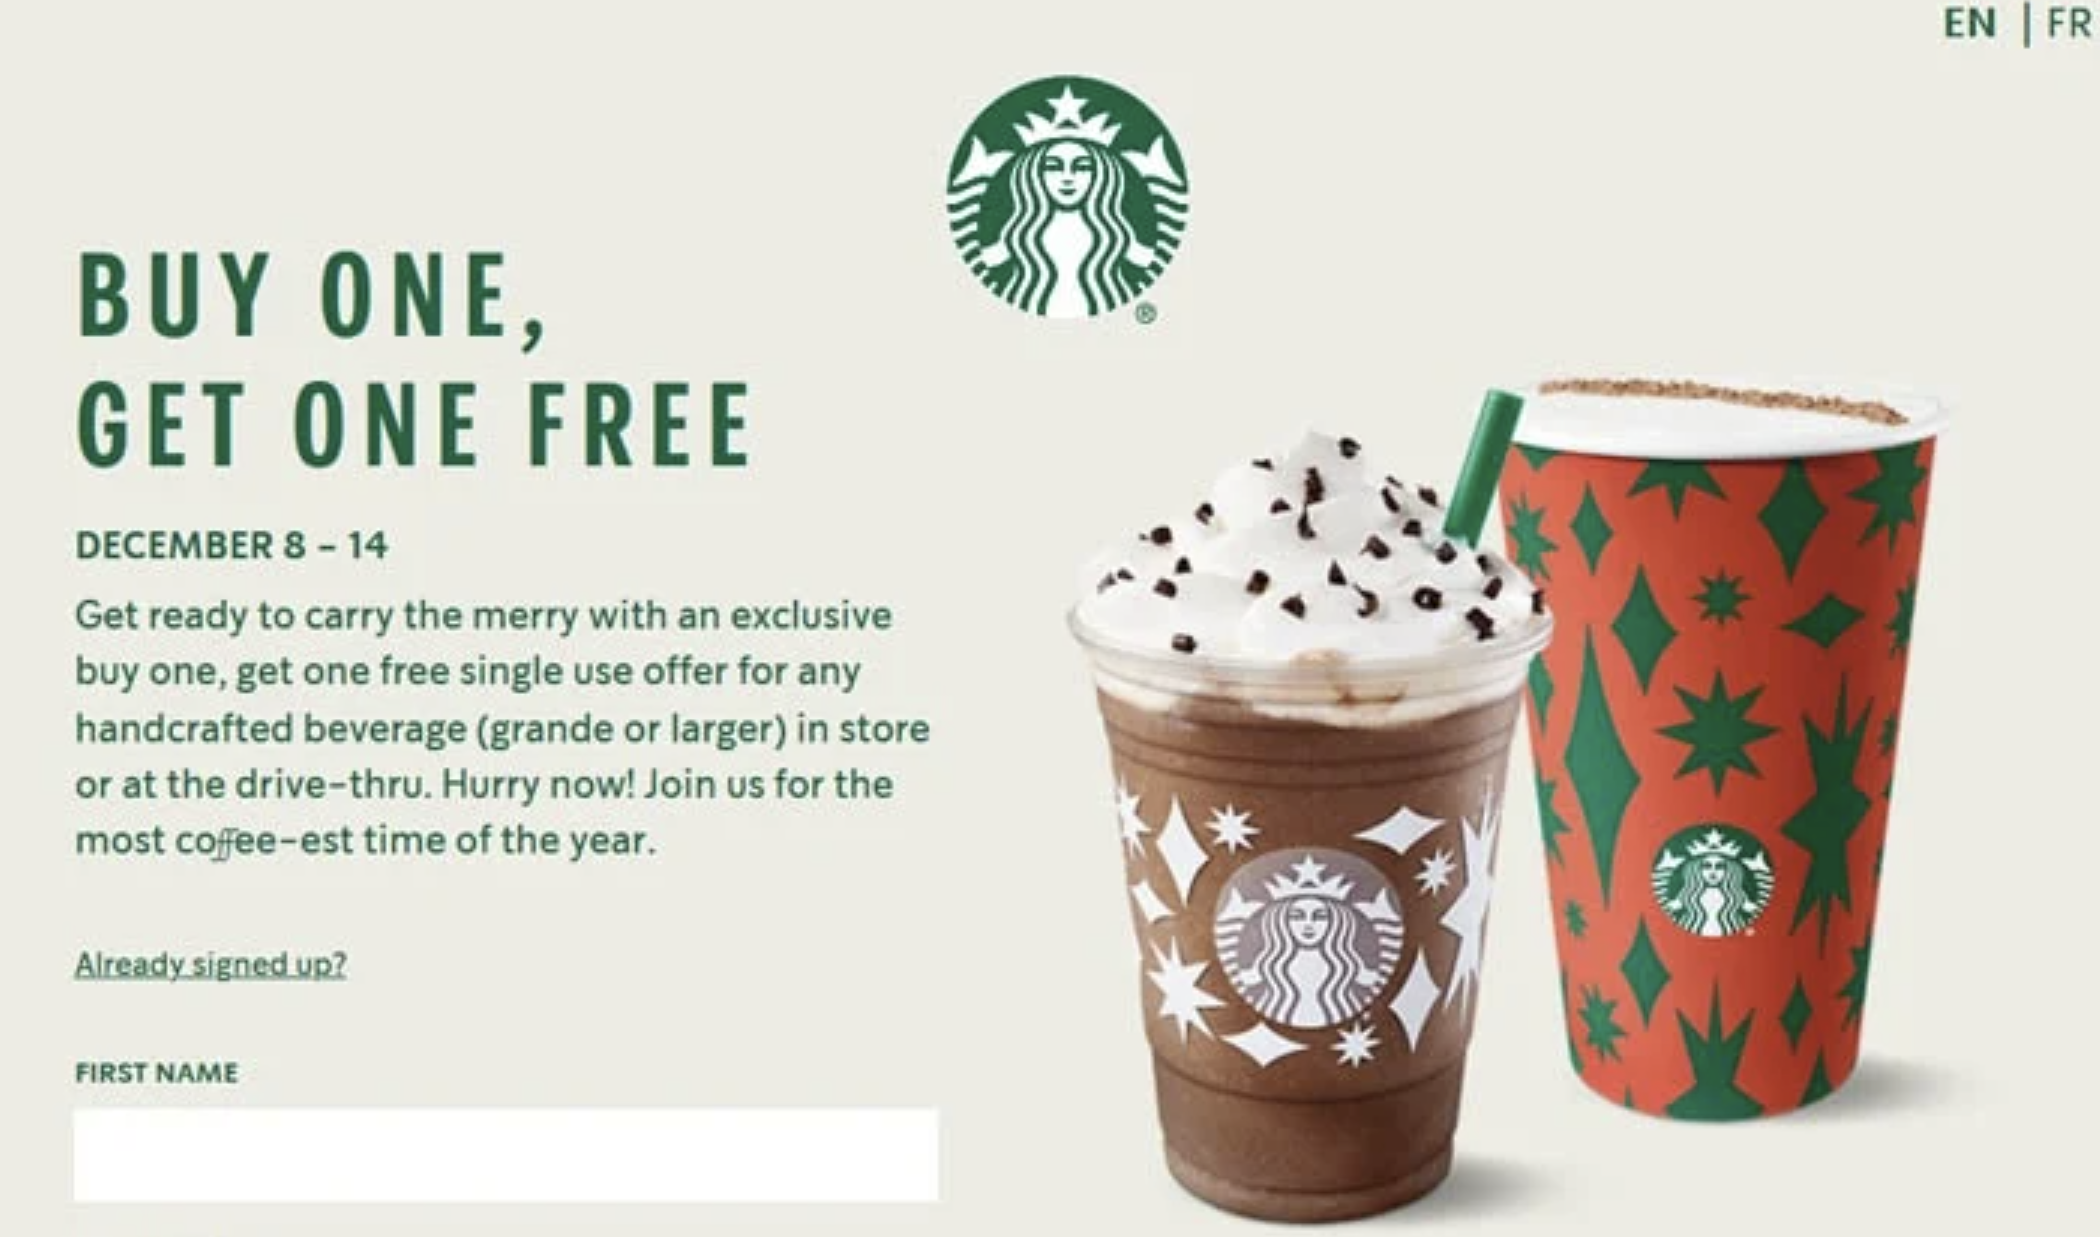 Holiday Buy-1-Get-1 giveaway at Starbucks